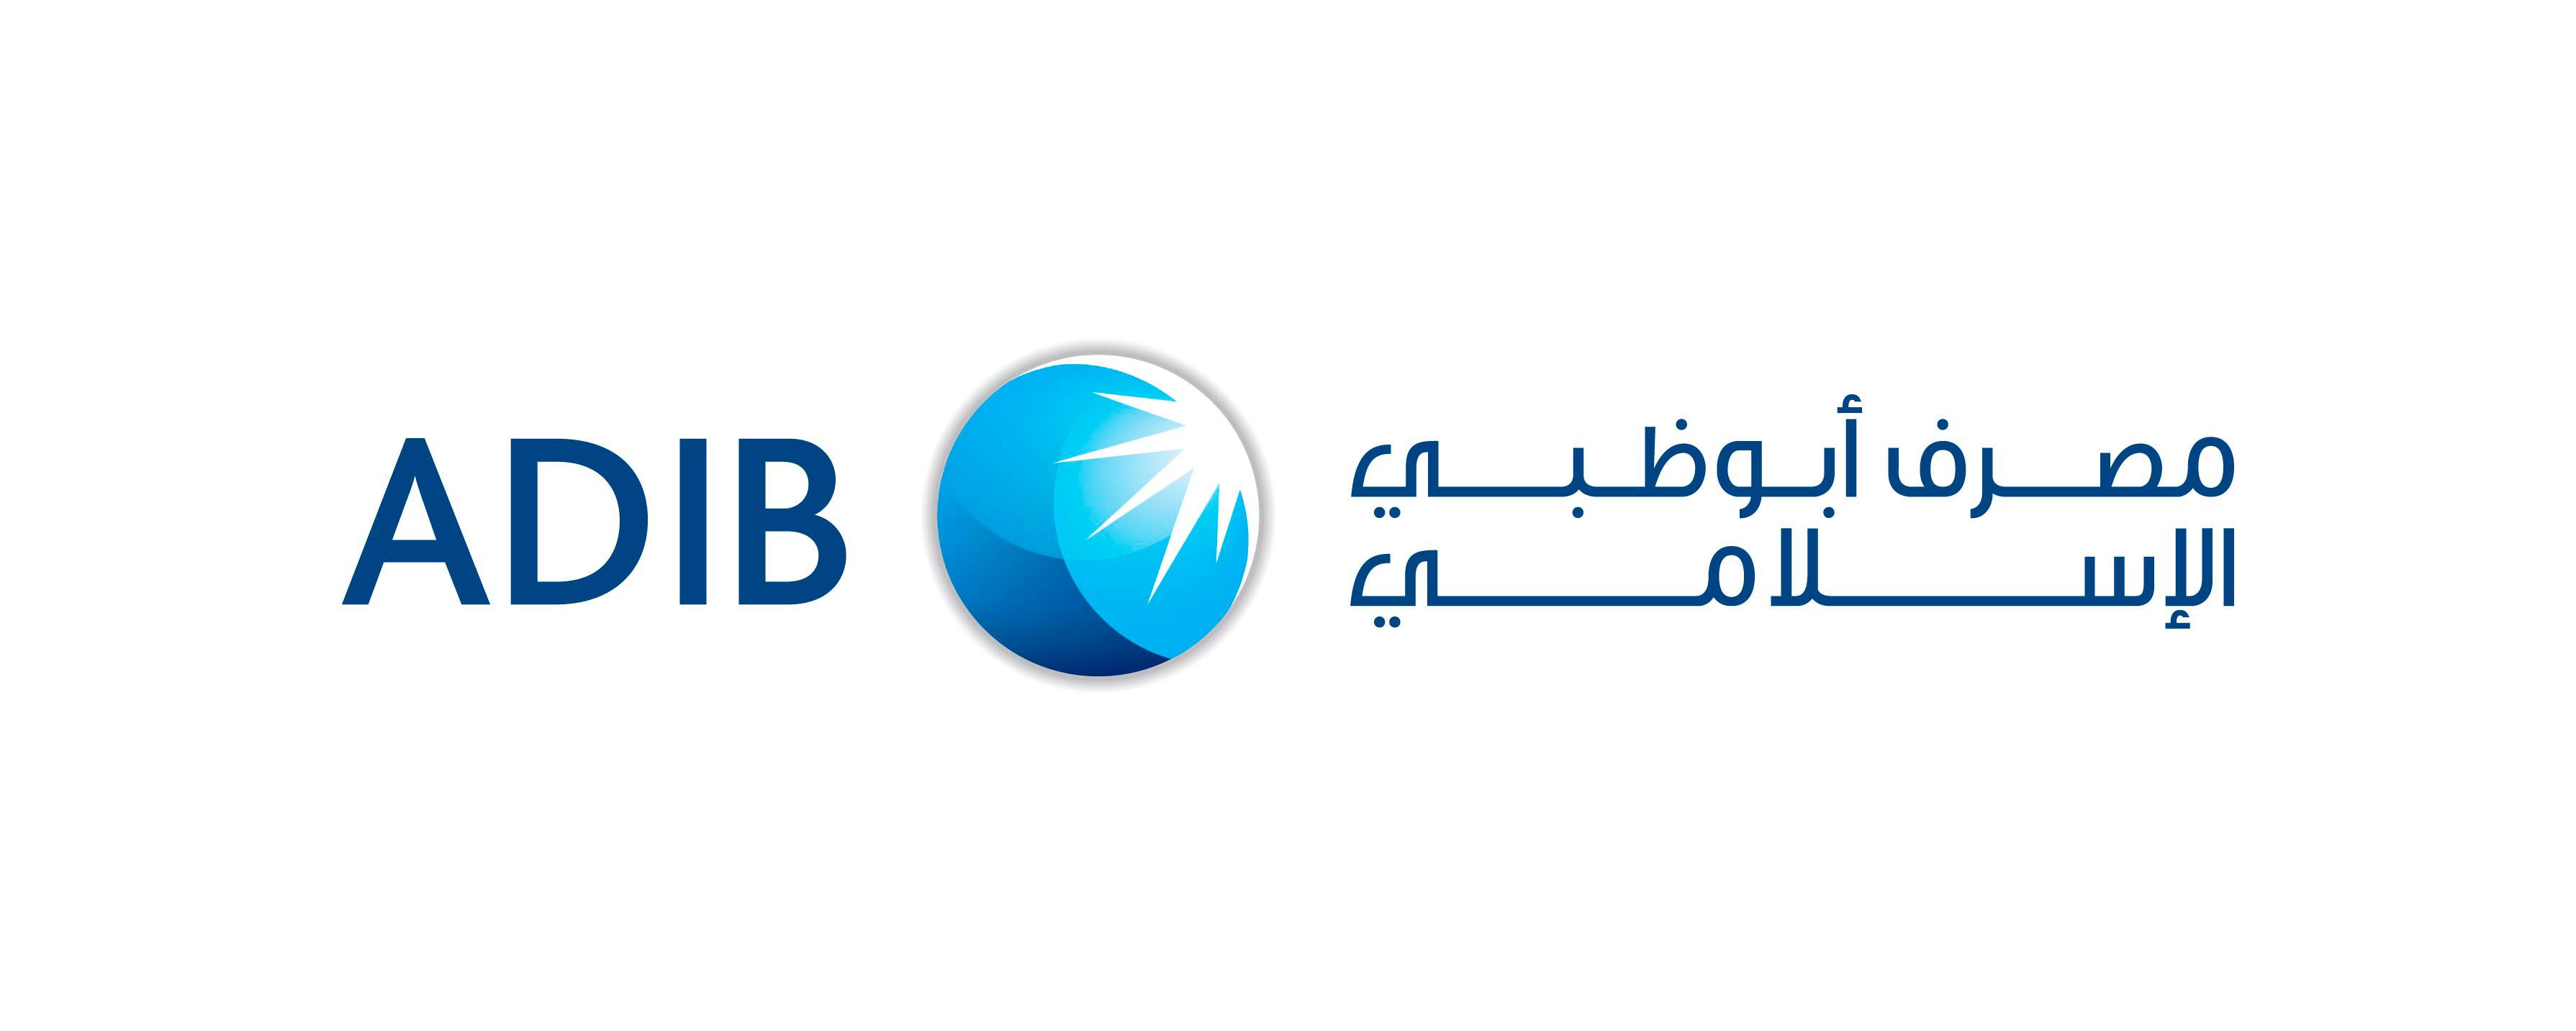 Abu Dhabi Islamic Bank Brand Logo